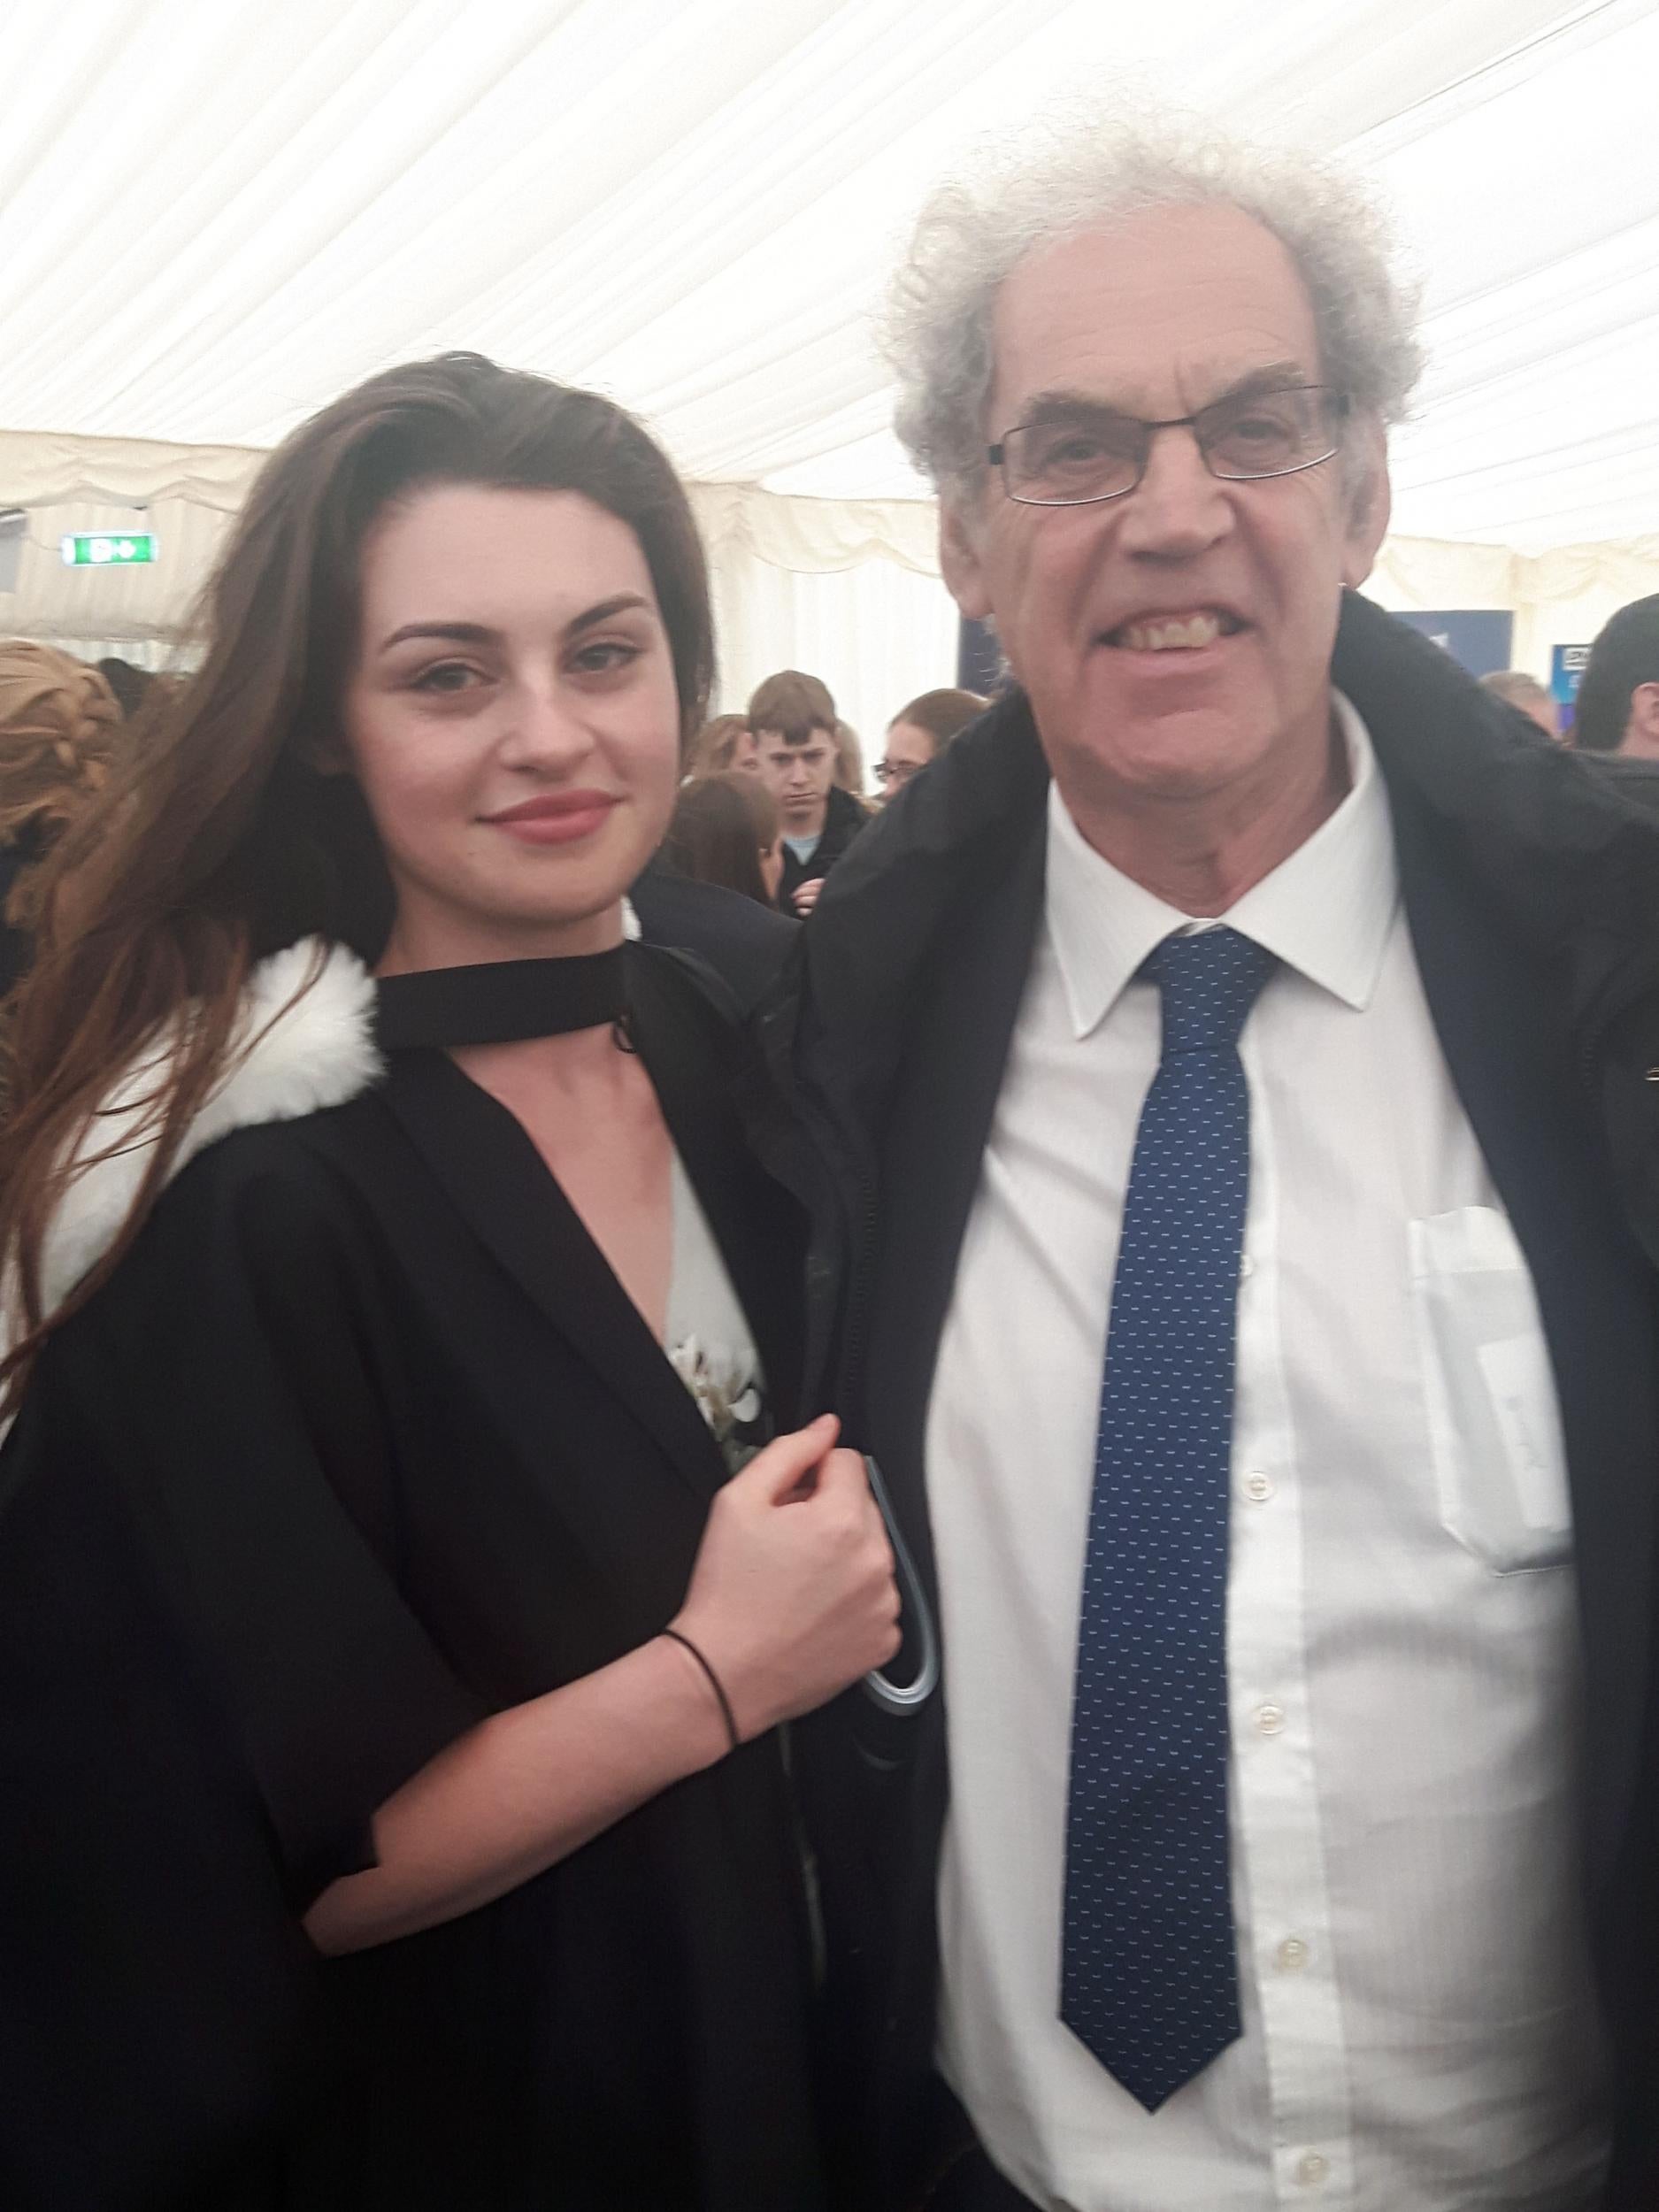 John Lichfield attending his daughter's graduation ceremony